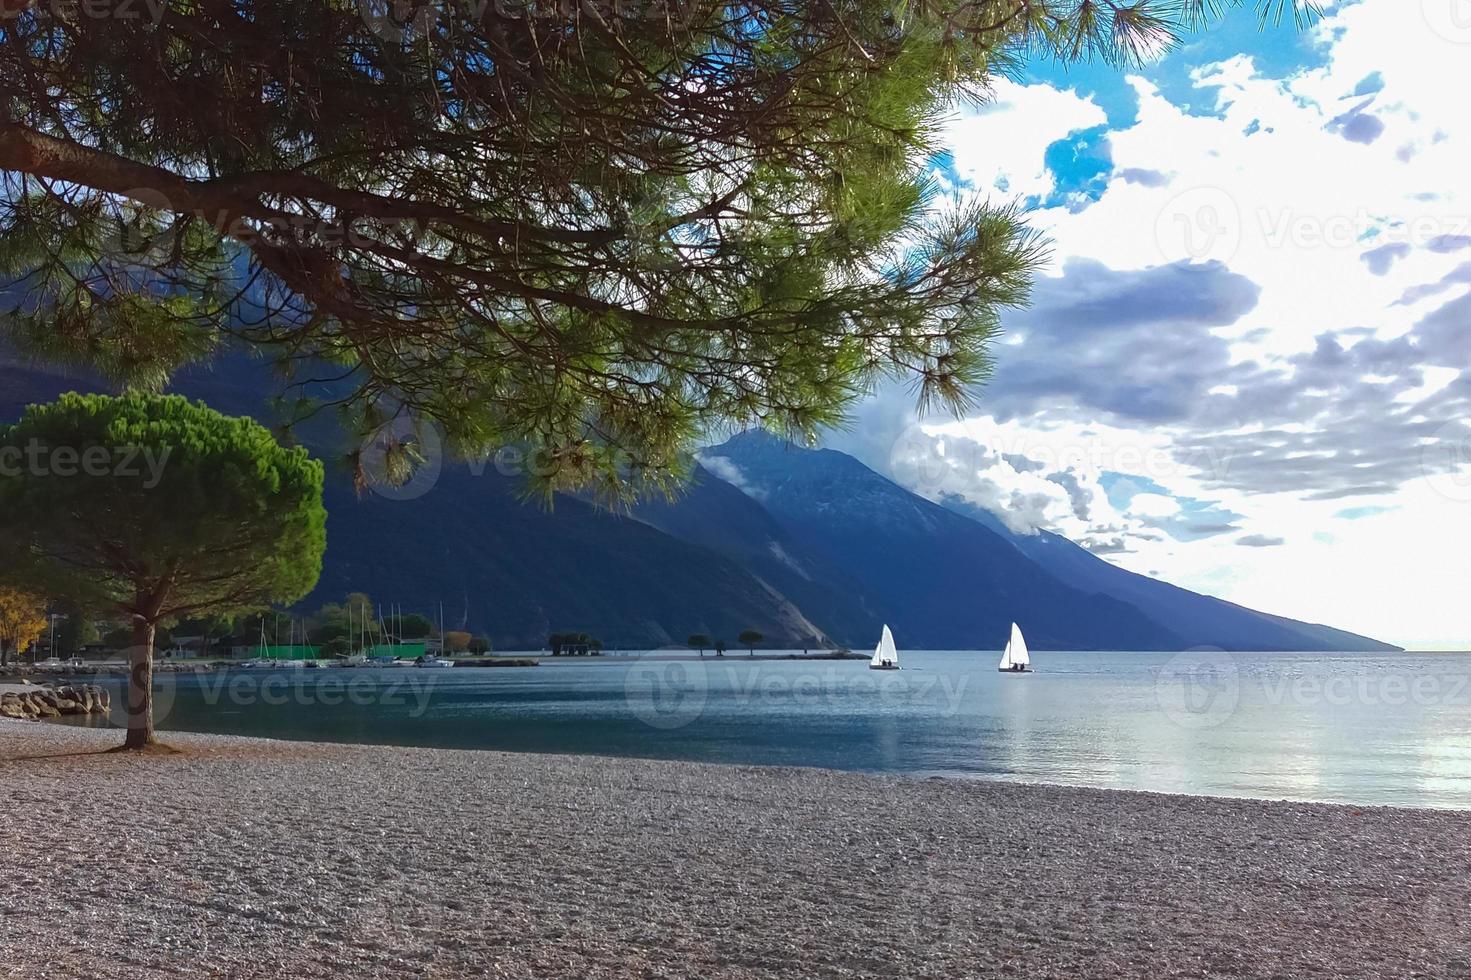 Mountain lake scenery with two sailing yachts, Garda lake landscape photo